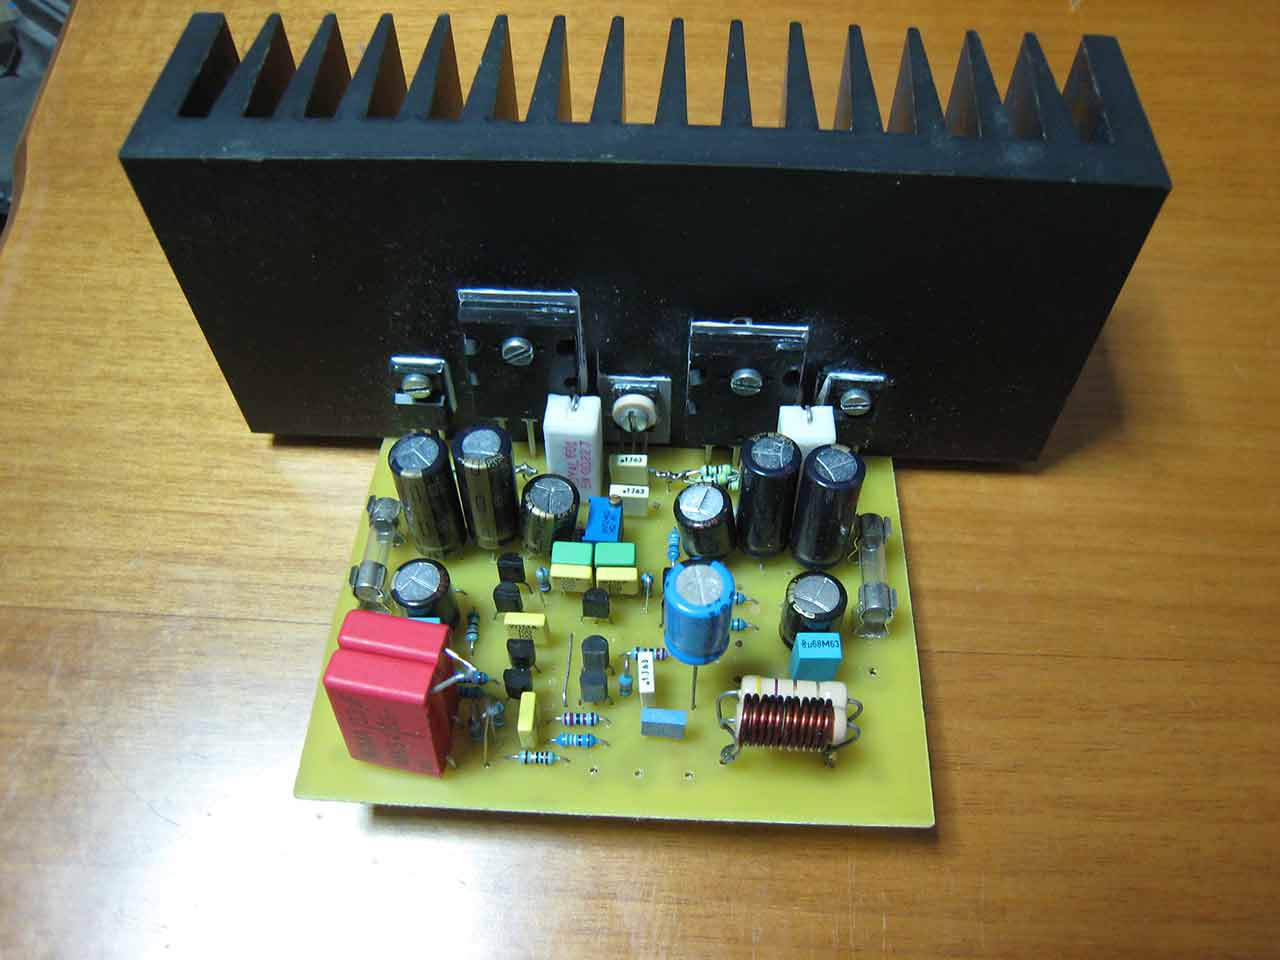 SymAsym 5_4 audio amplifier 60W @8 ohm
http://www.lf-pro.net/mbittner/Sym5_Webpage/symasym5_3.html